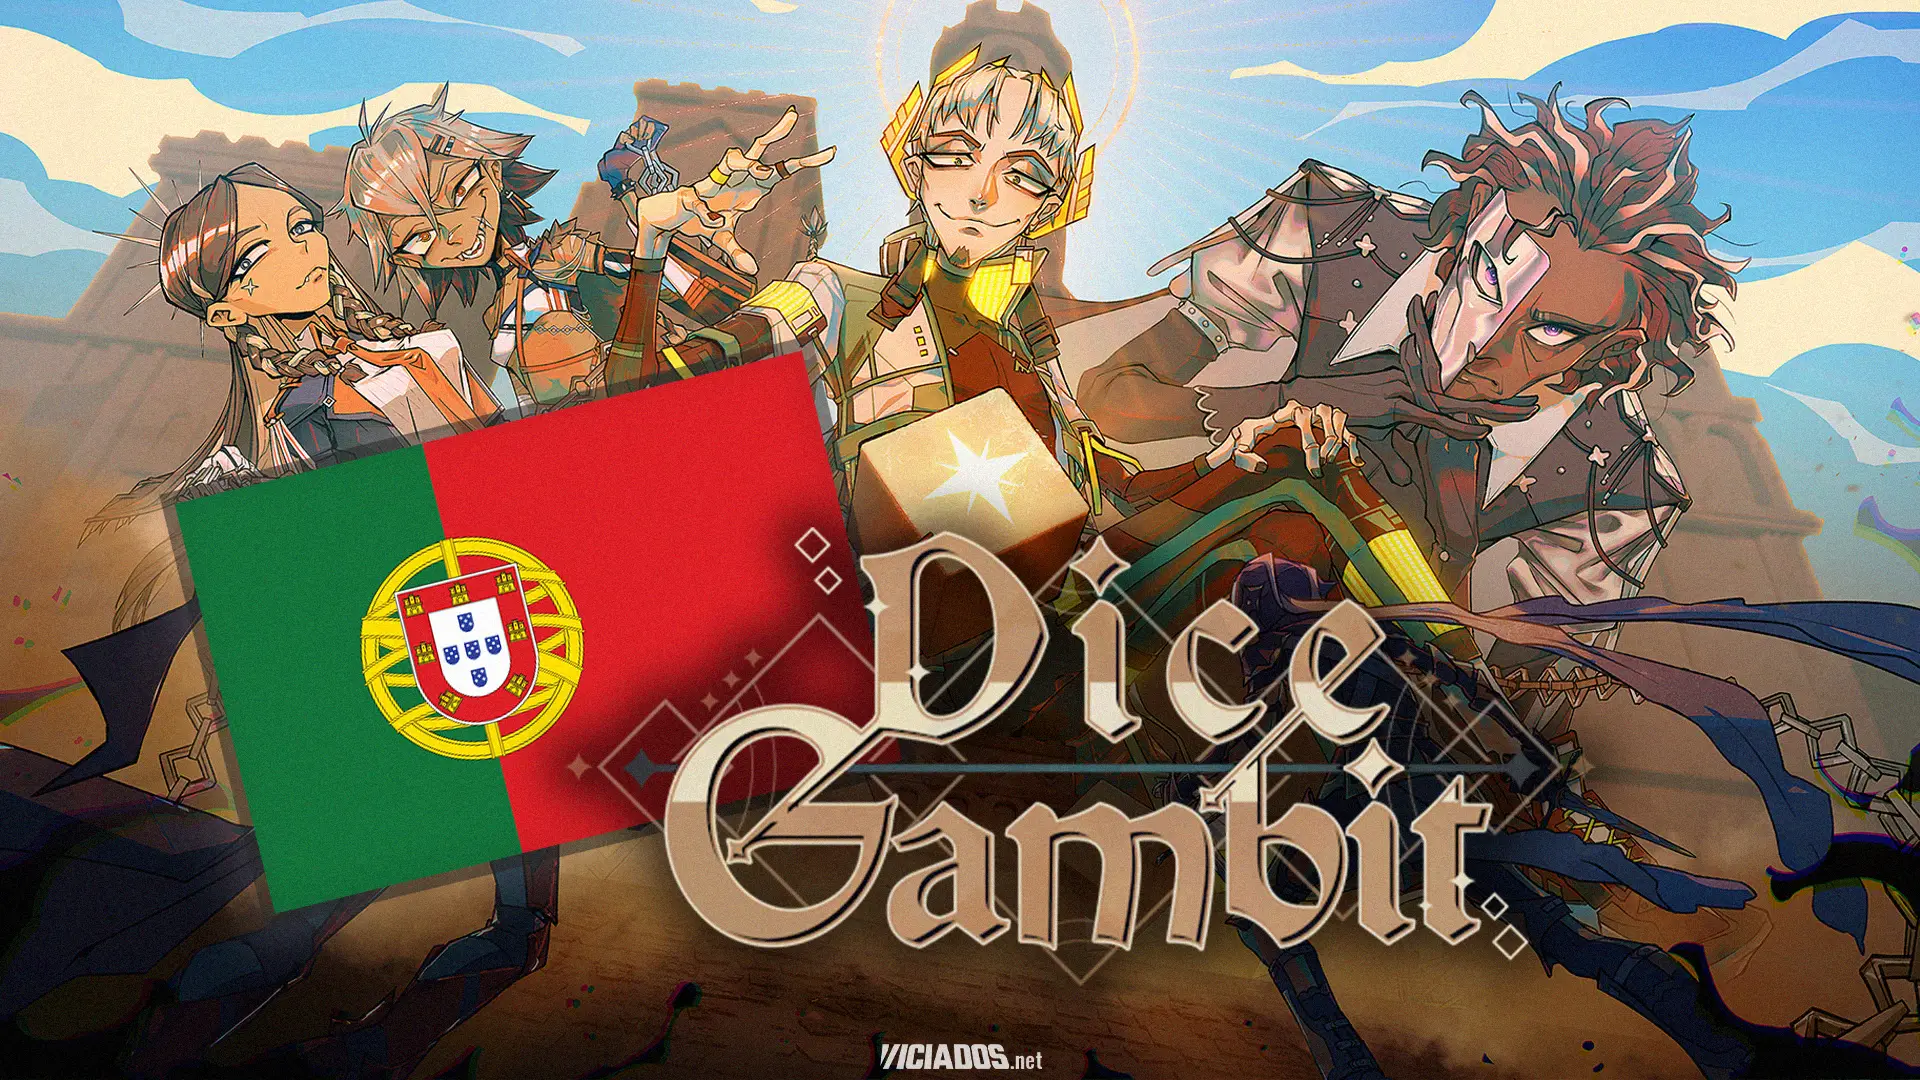 Dice Gambit | Trilha sonora deste jogo traz o encanto do Fado e da cultura portuguesa para os jogos 2024 Portal Viciados